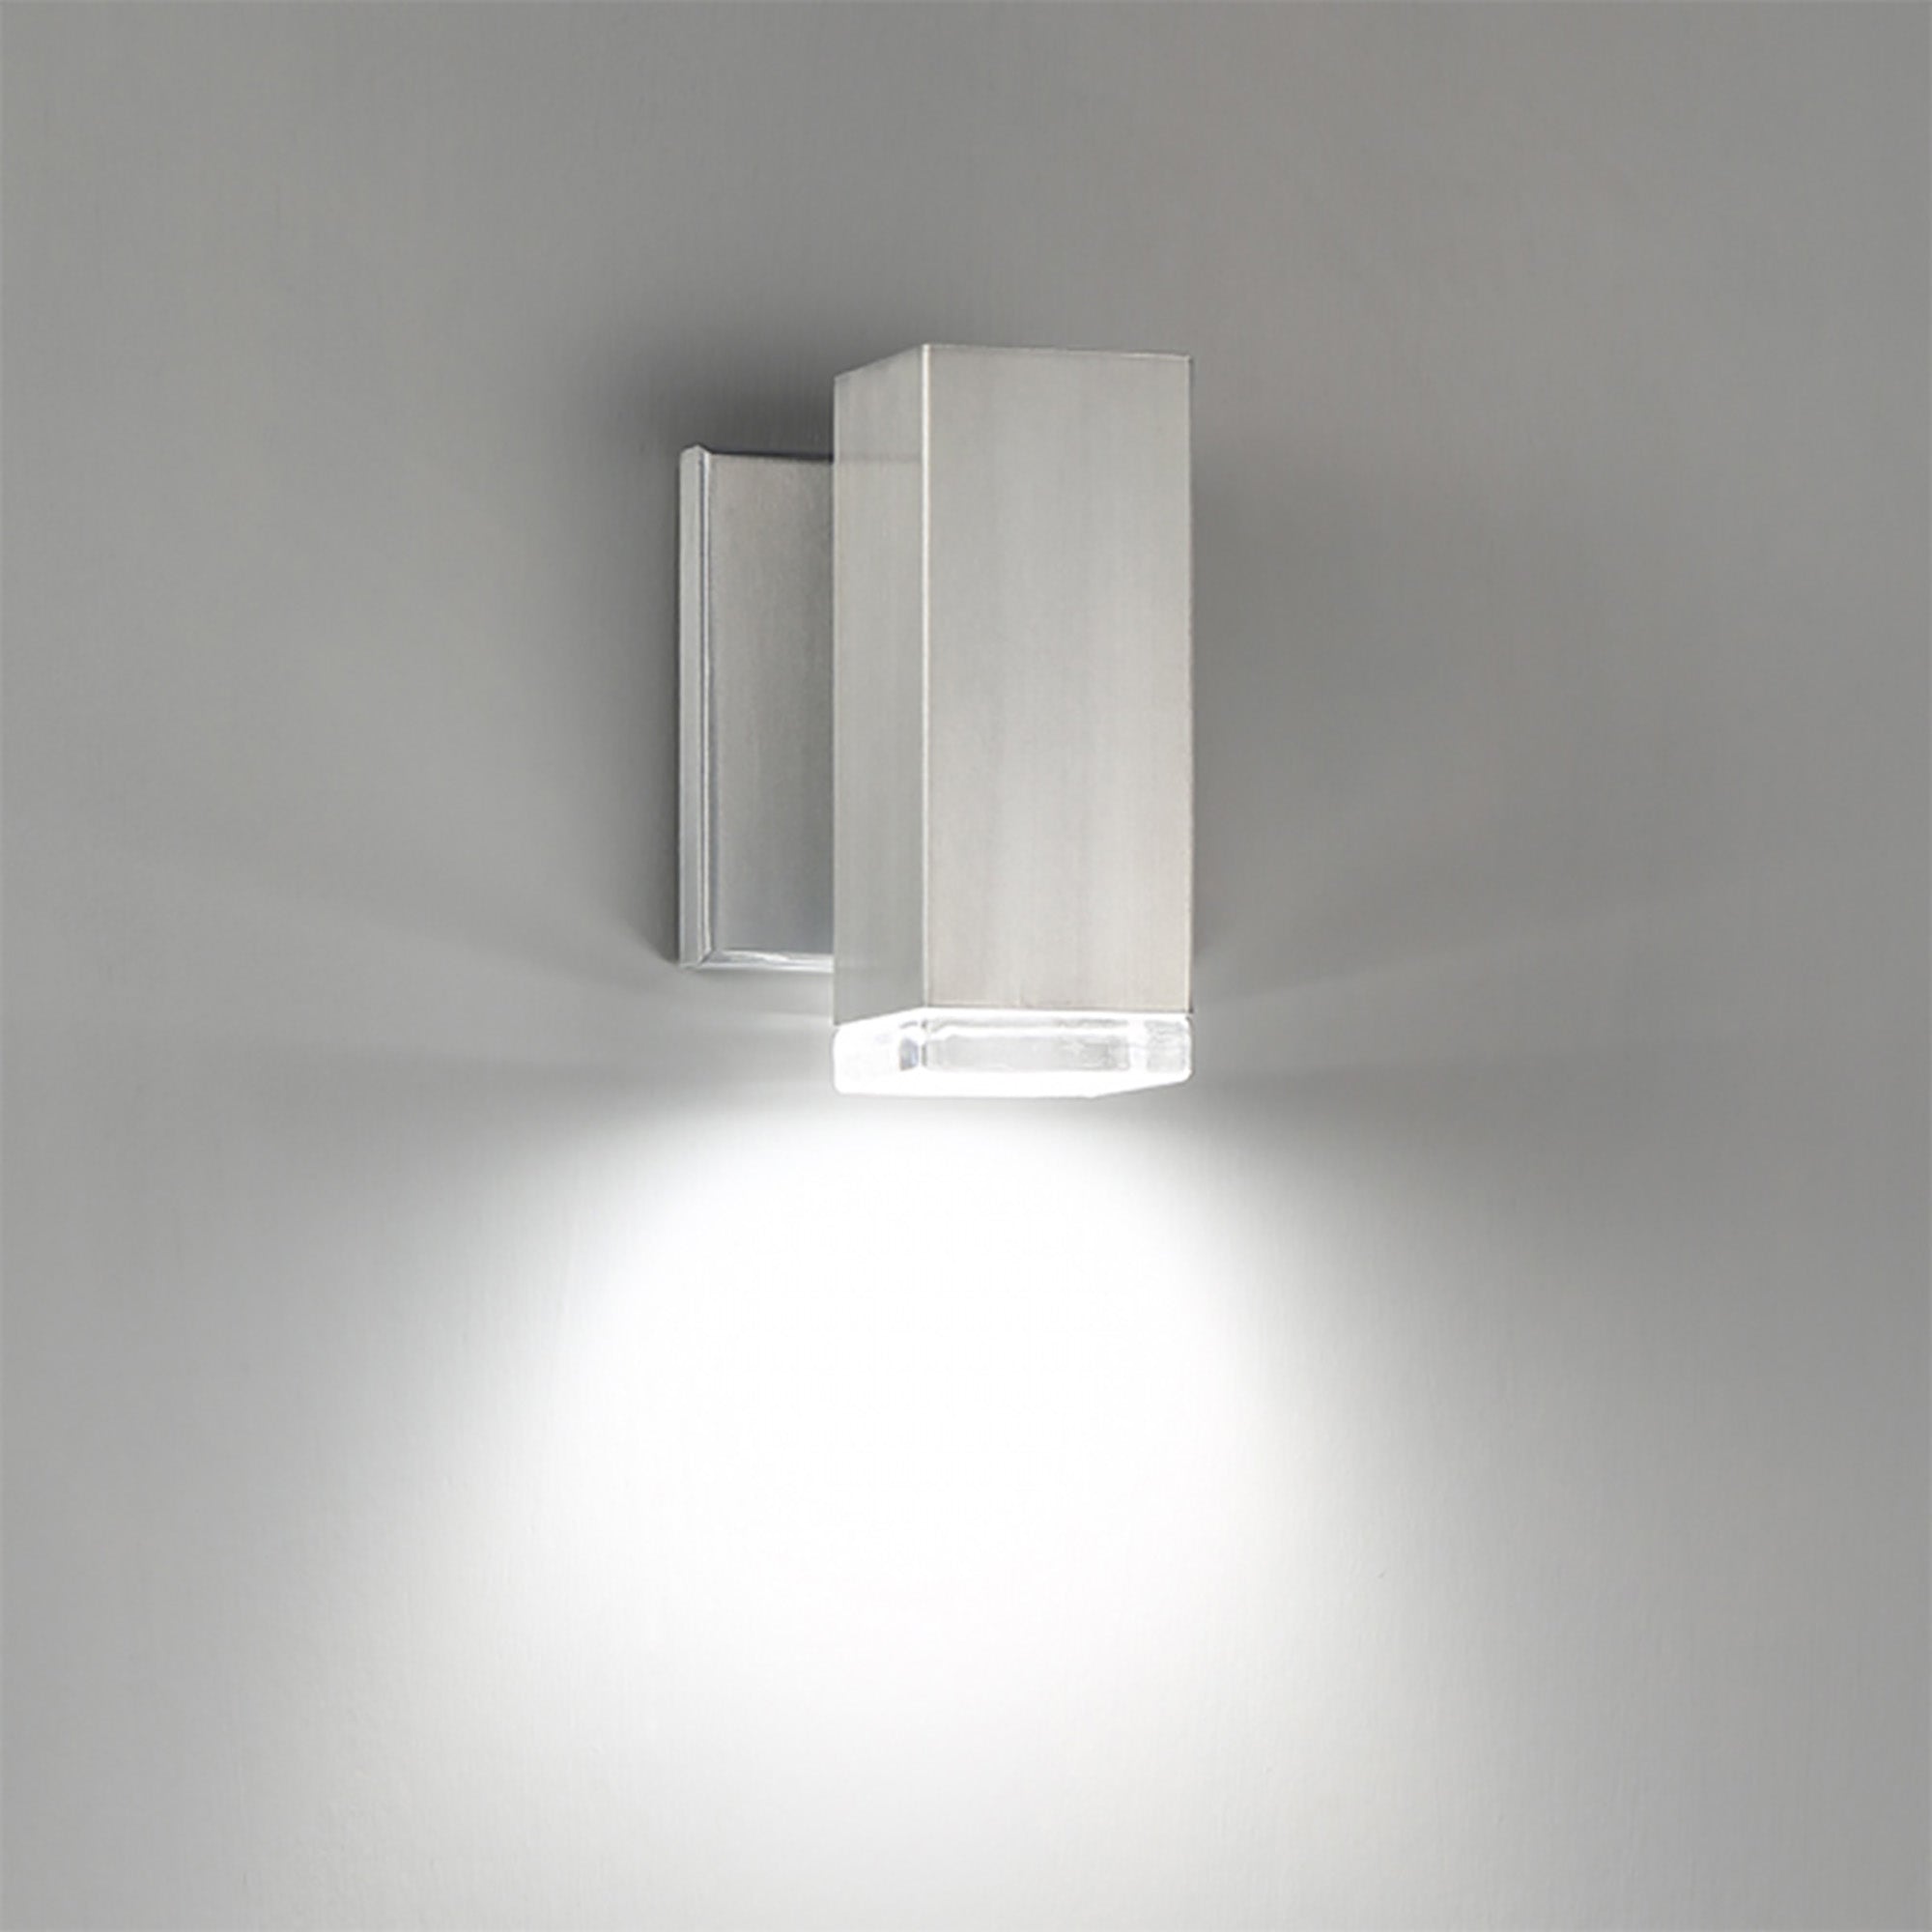 Block 6.1" LED Indoor/Outdoor Wall Light